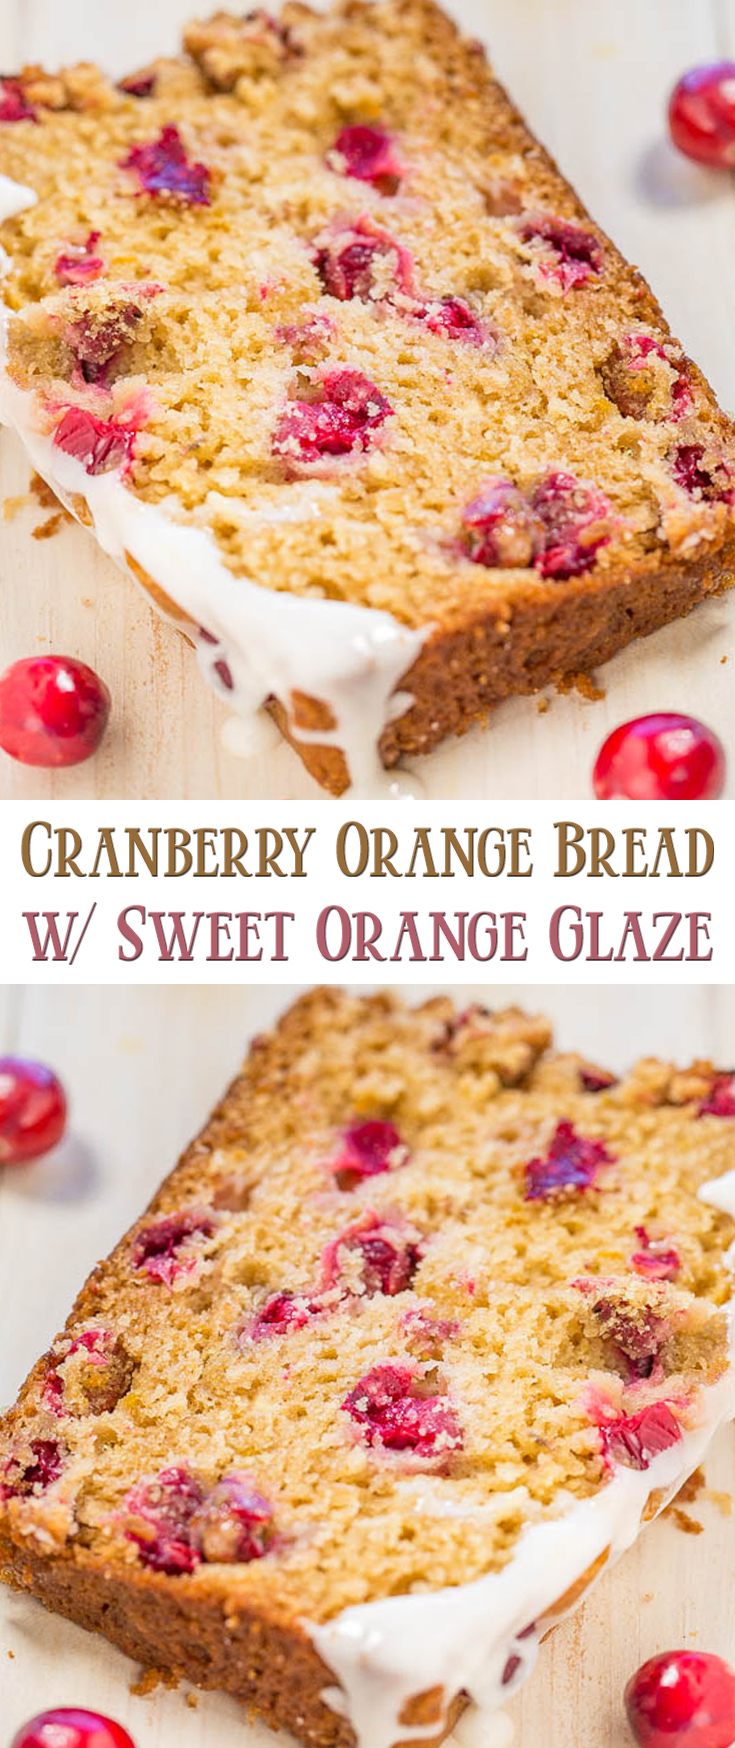 Cranberry Orange Bread with Sweet Orange Glaze